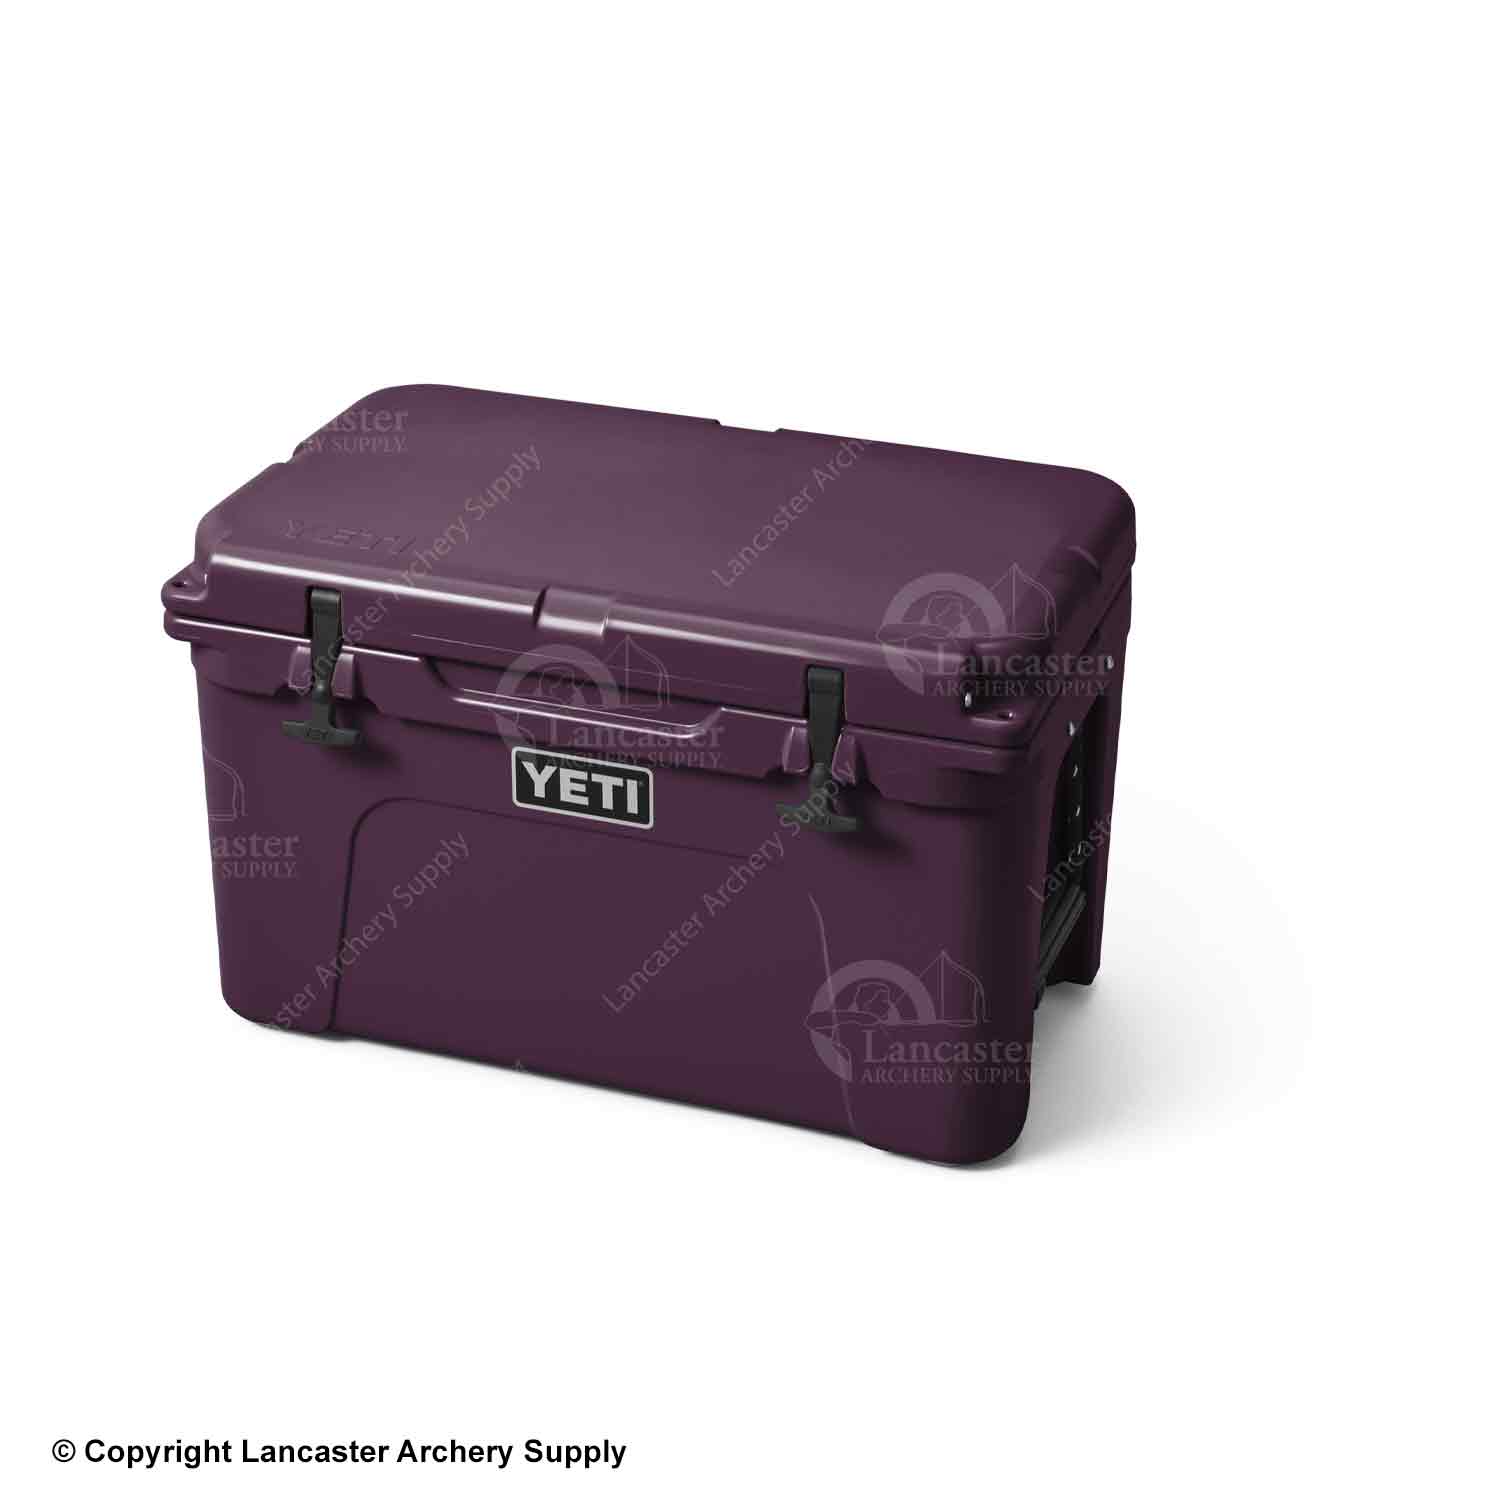 YETI Tundra 45 Cooler (Limited Edition Nordic Purple)